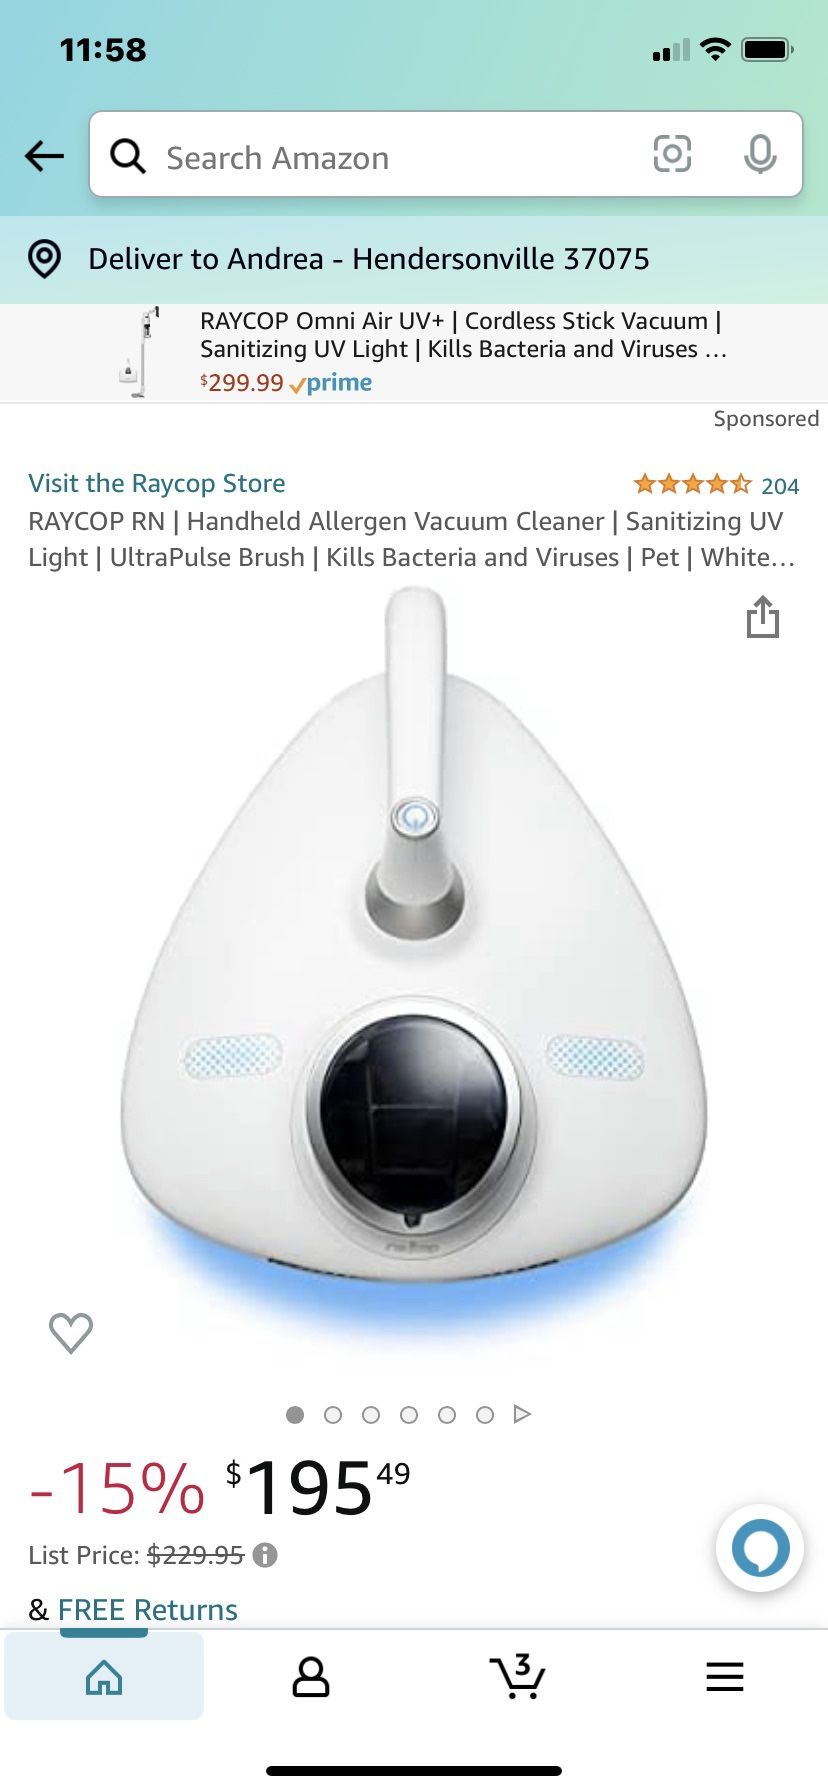 RAYCOP RN | Handheld Allergen Vacuum Cleaner | Sanitizing UV Light | UltraPulse Brush New Open Box